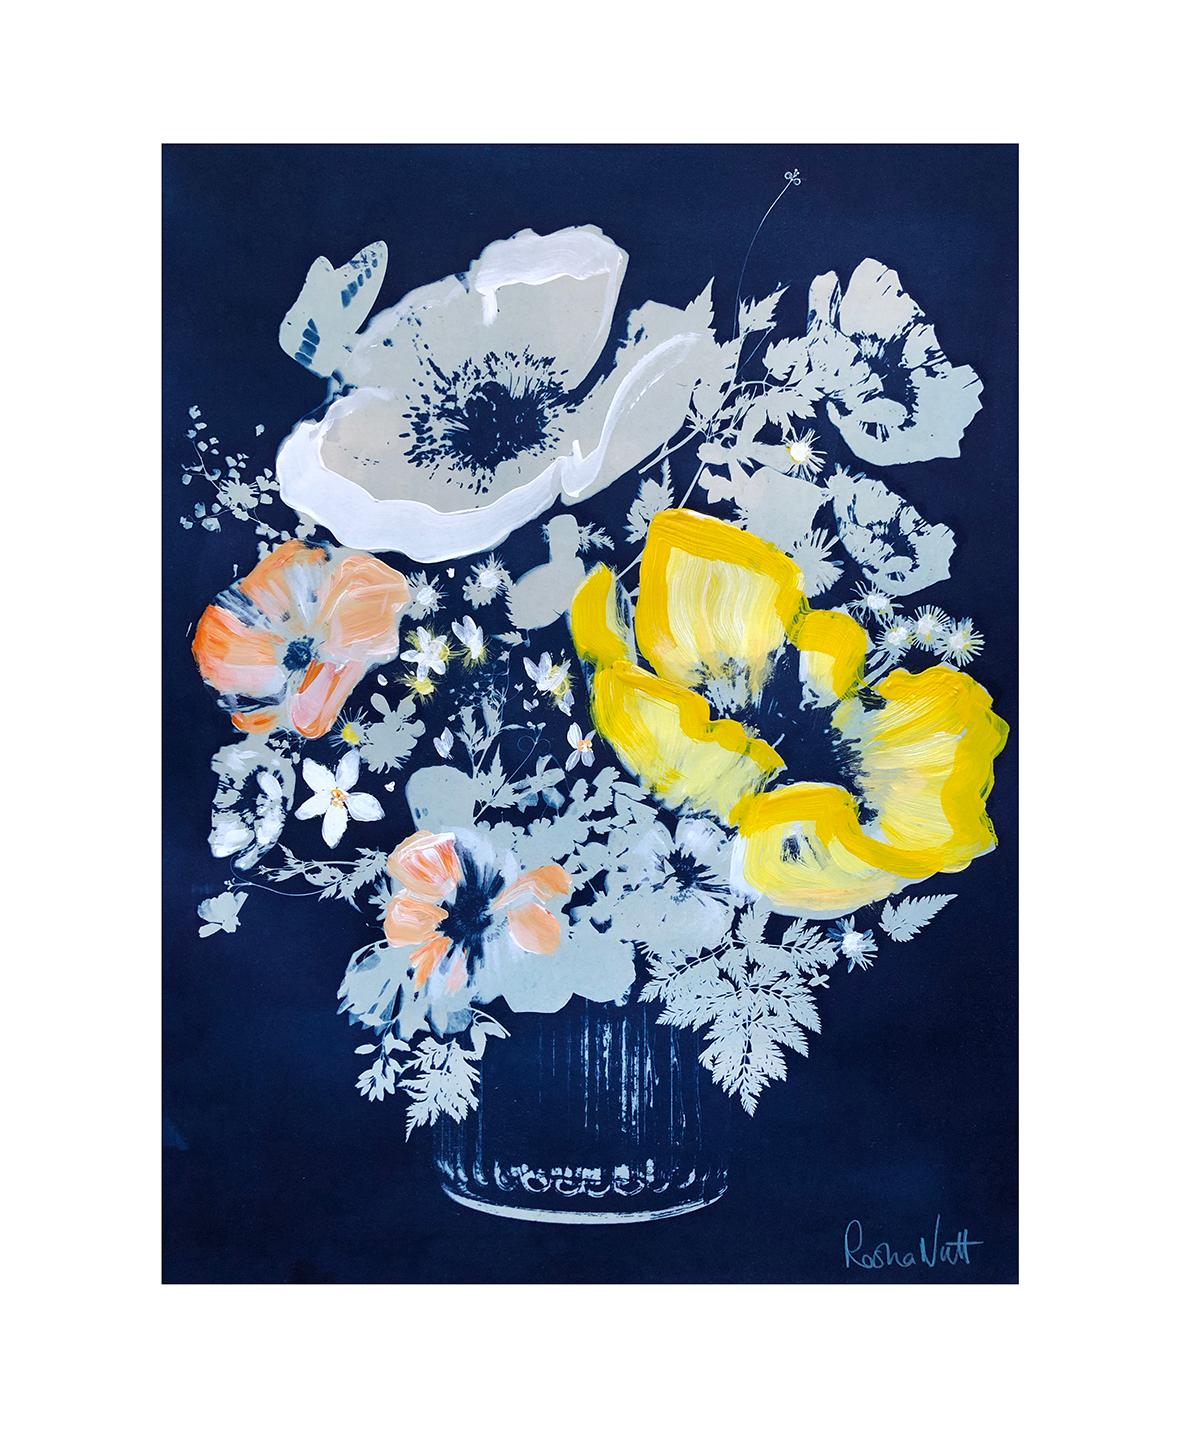 Rosha Nutt, Yellow Poppy, Cyanotype, Monoprint, 44x58 cm, £300, 2020.